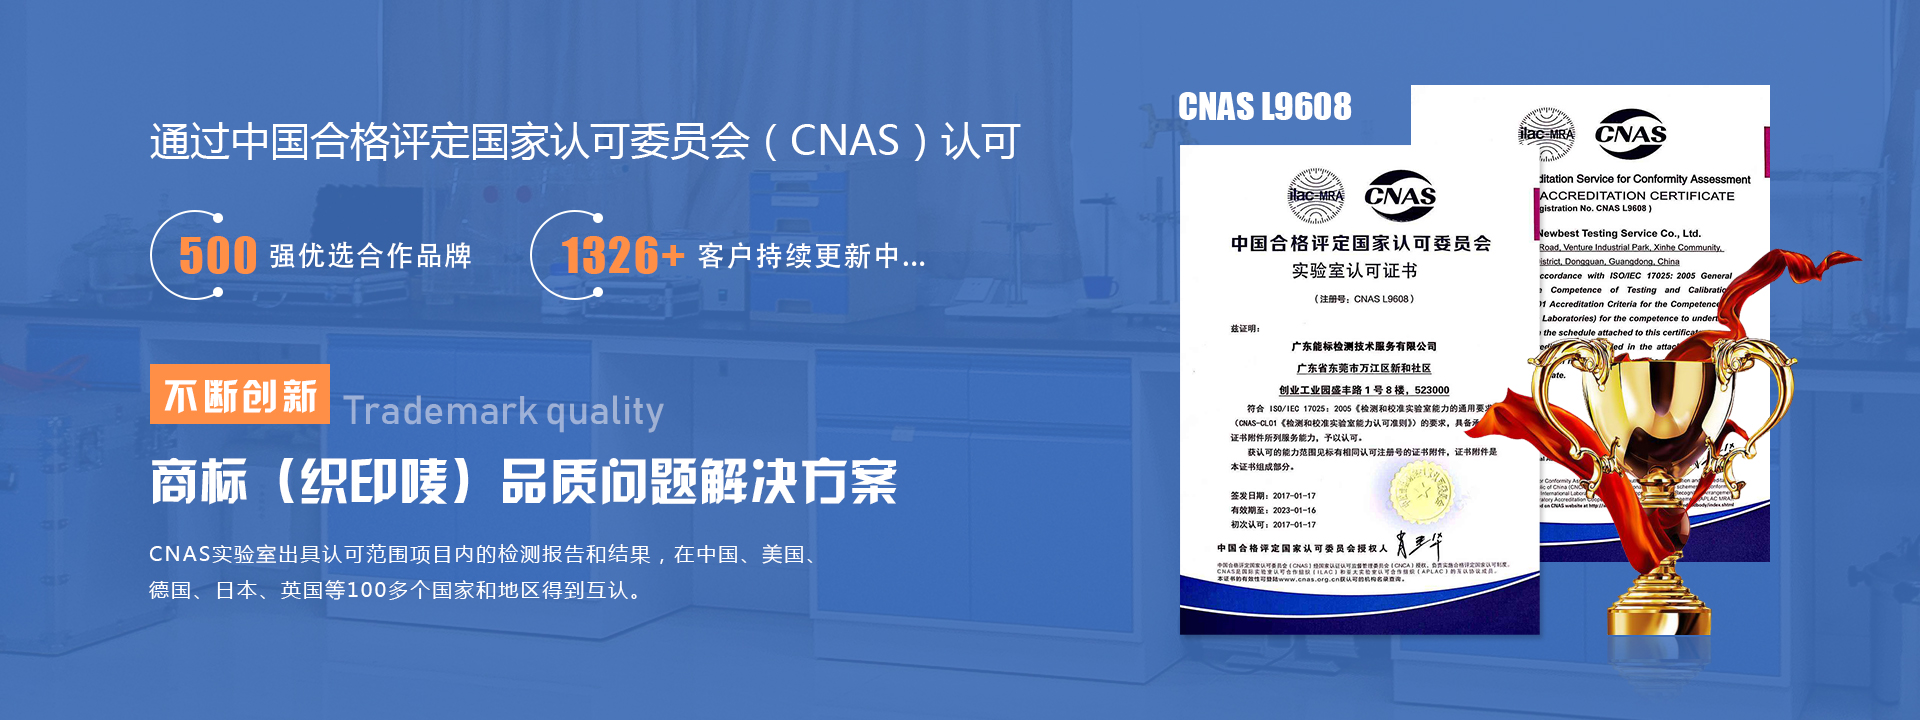 CNAS认可 商标（织印唛）品质问题解决方案